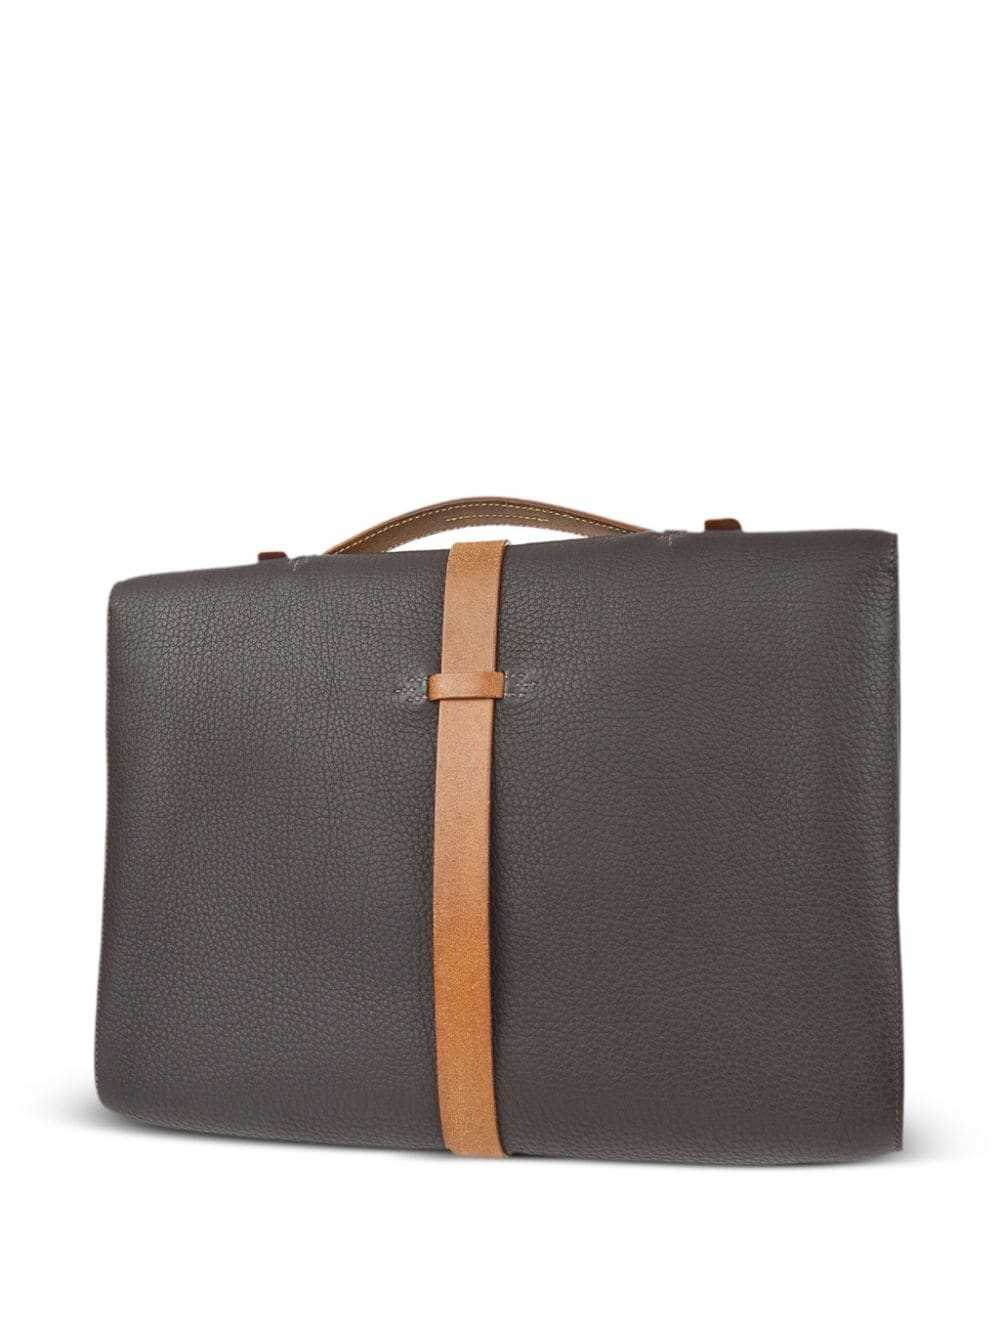 Hermès Pre-Owned 2004 Etriviere briefcase - Brown - image 2